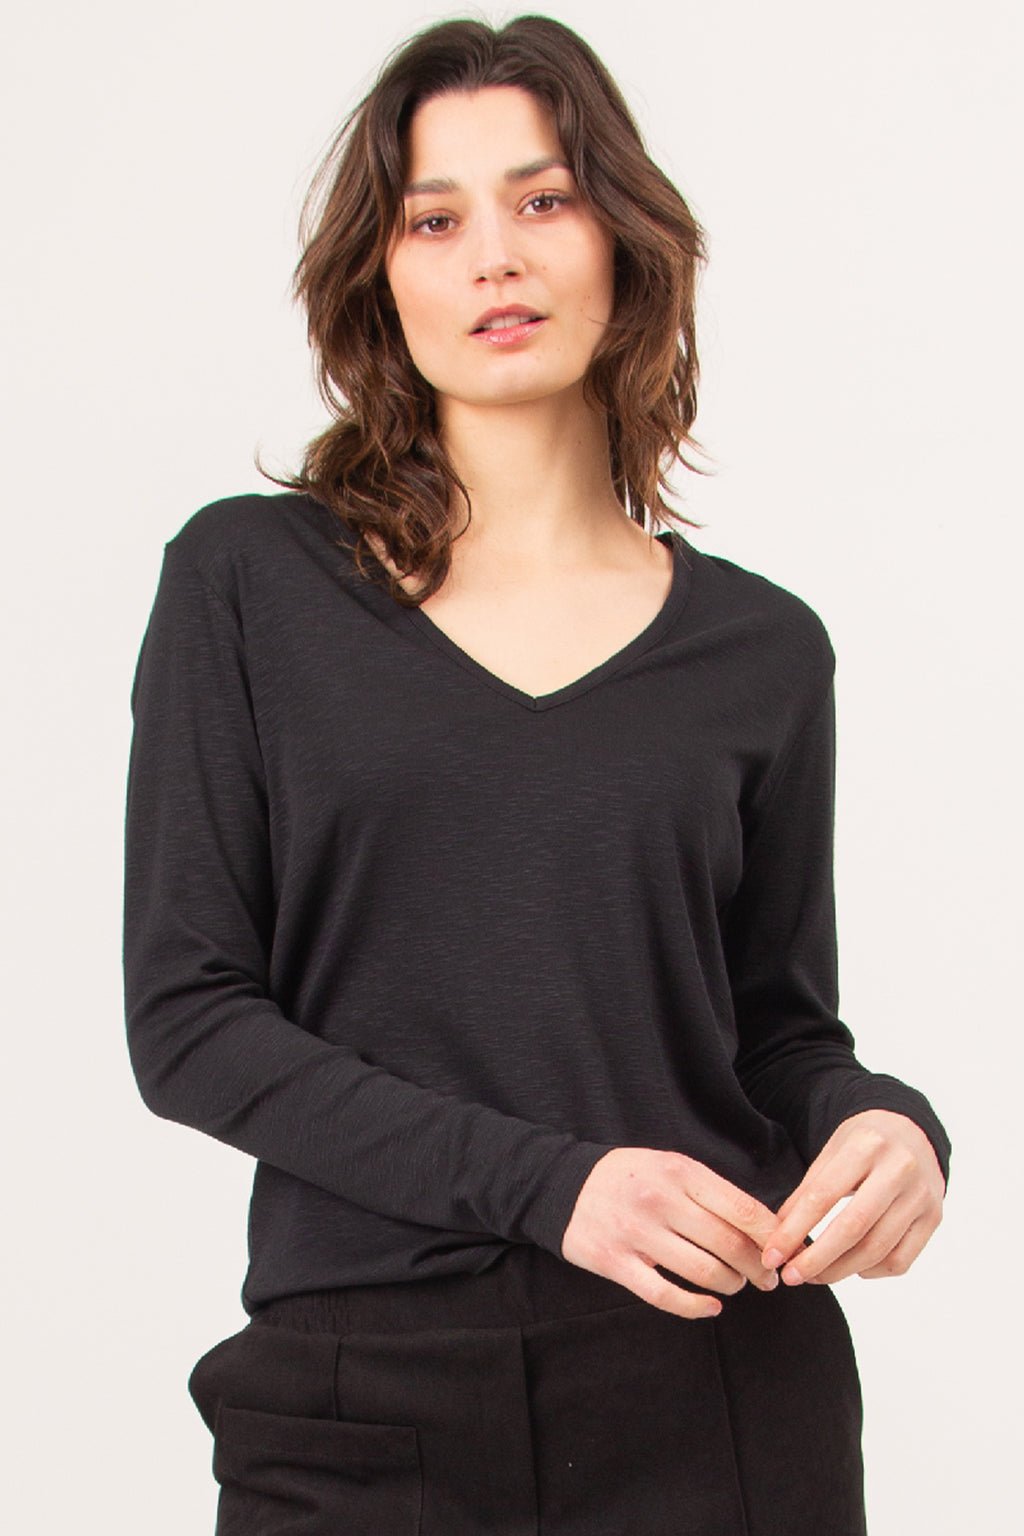 Cacharel black long sleeved T-shirt